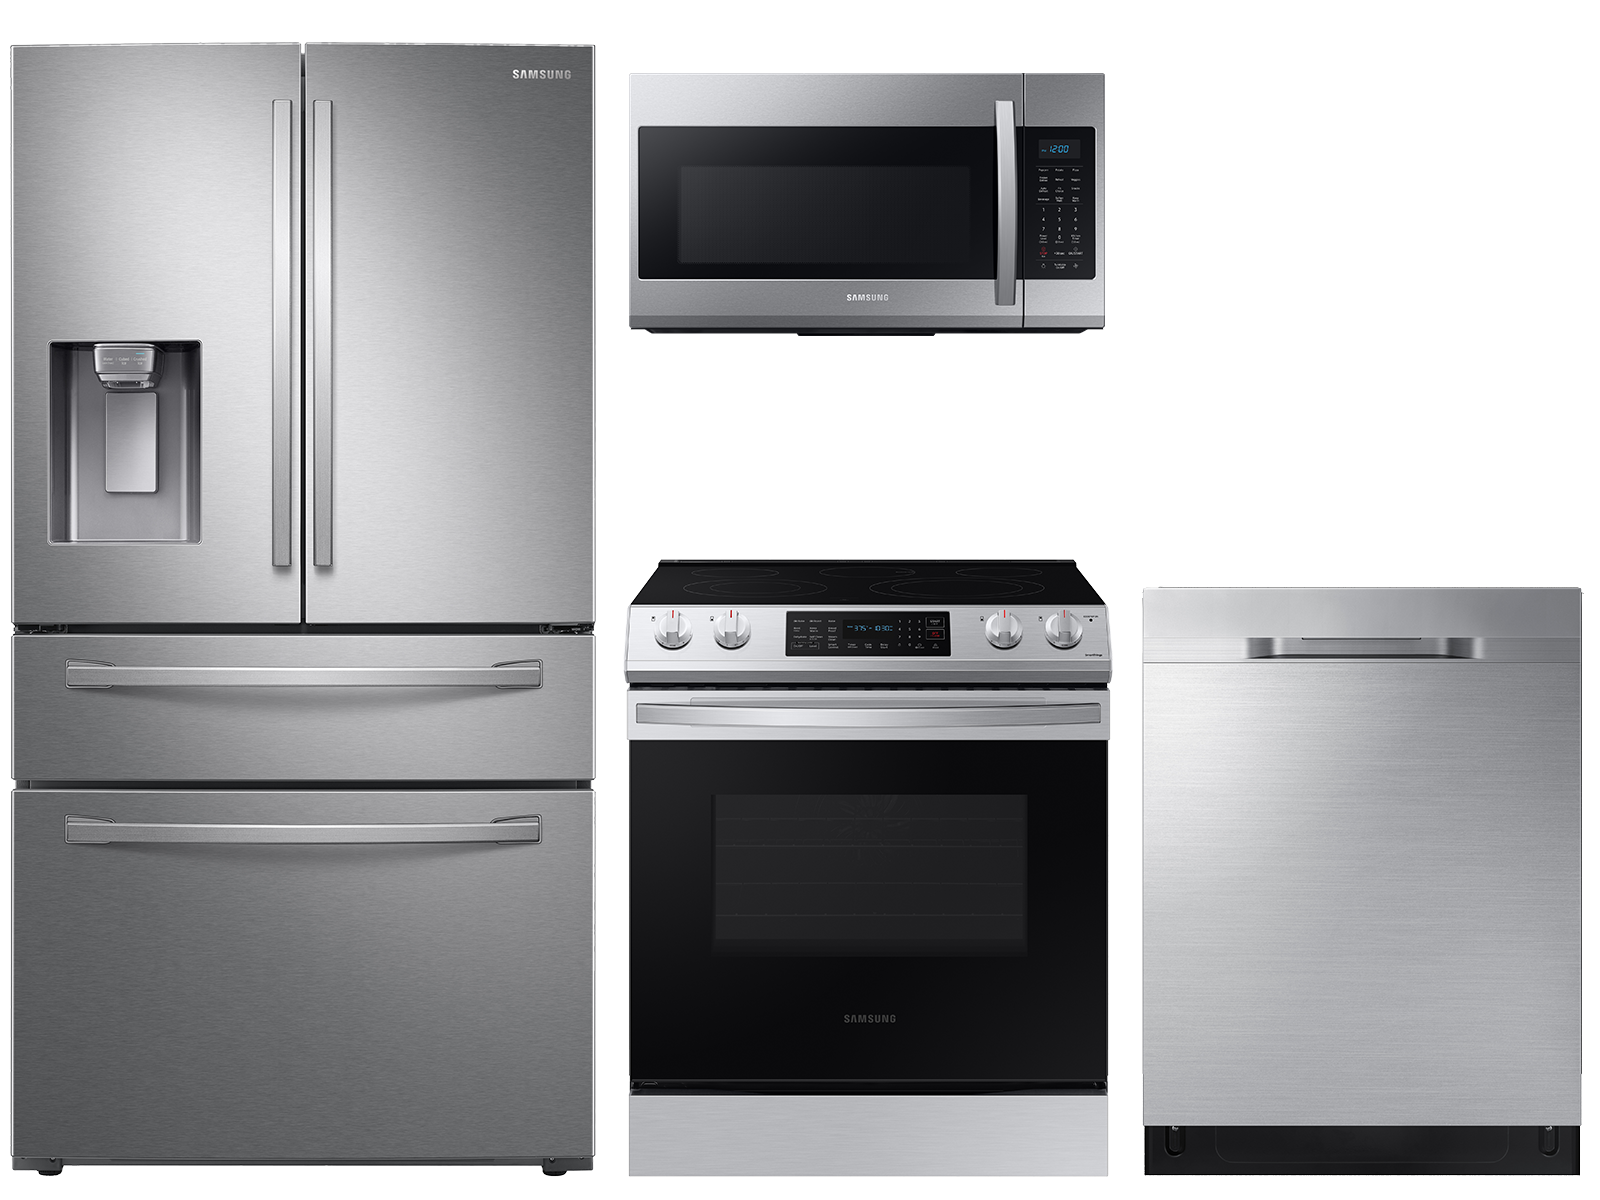 Samsung 23 cu. ft. counter depth 4-door refrigerator, 6.3 cu. ft. electric range, microwave and 48 dBA dishwasher package(BNDL-1614004843395)